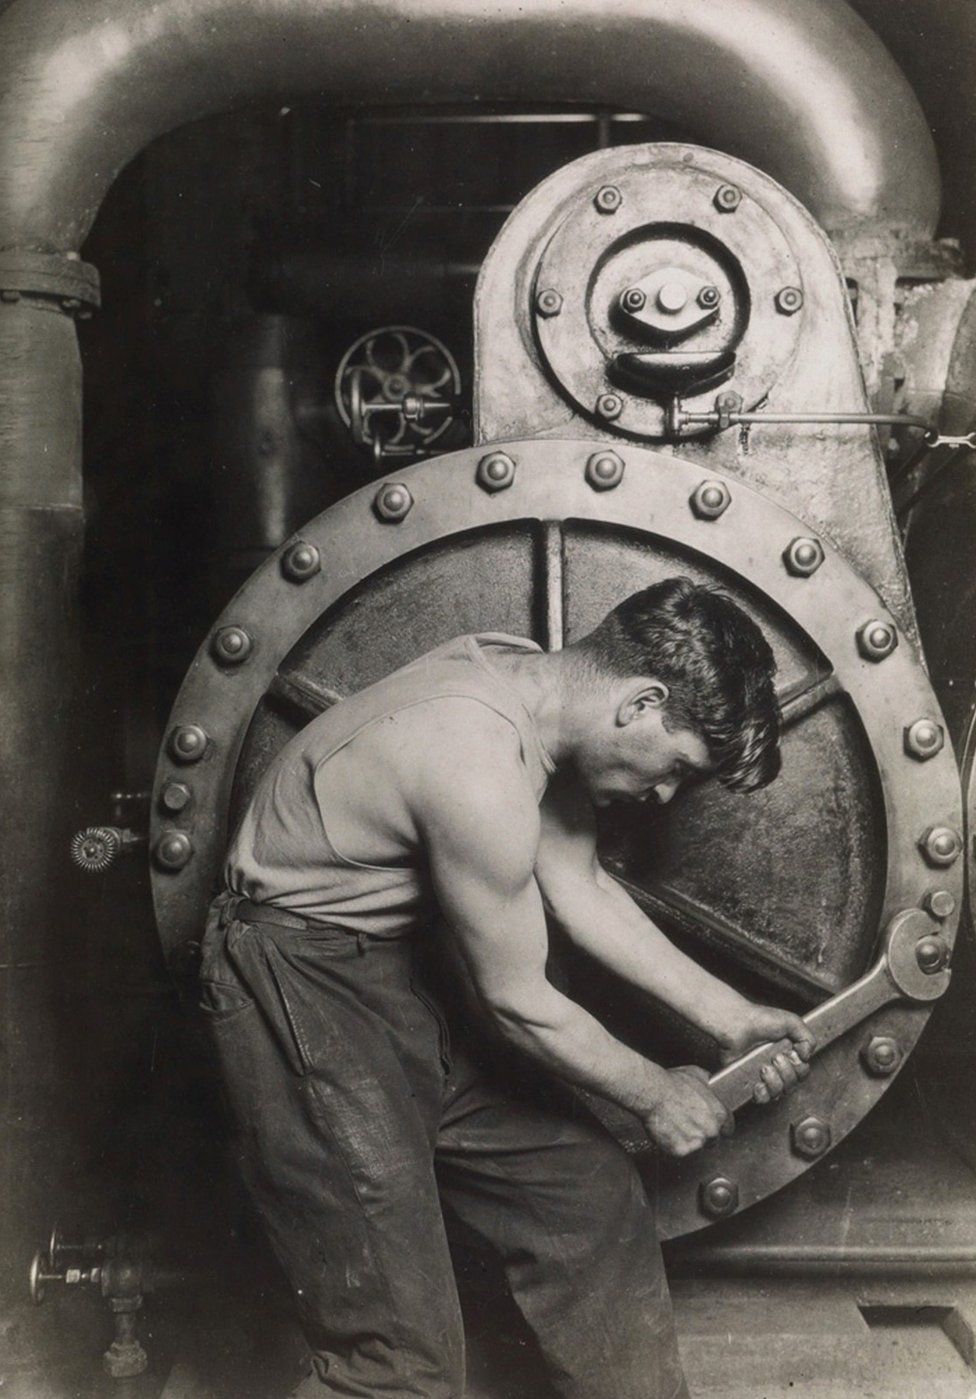 A mechanic uses a spanner on a steam pump.